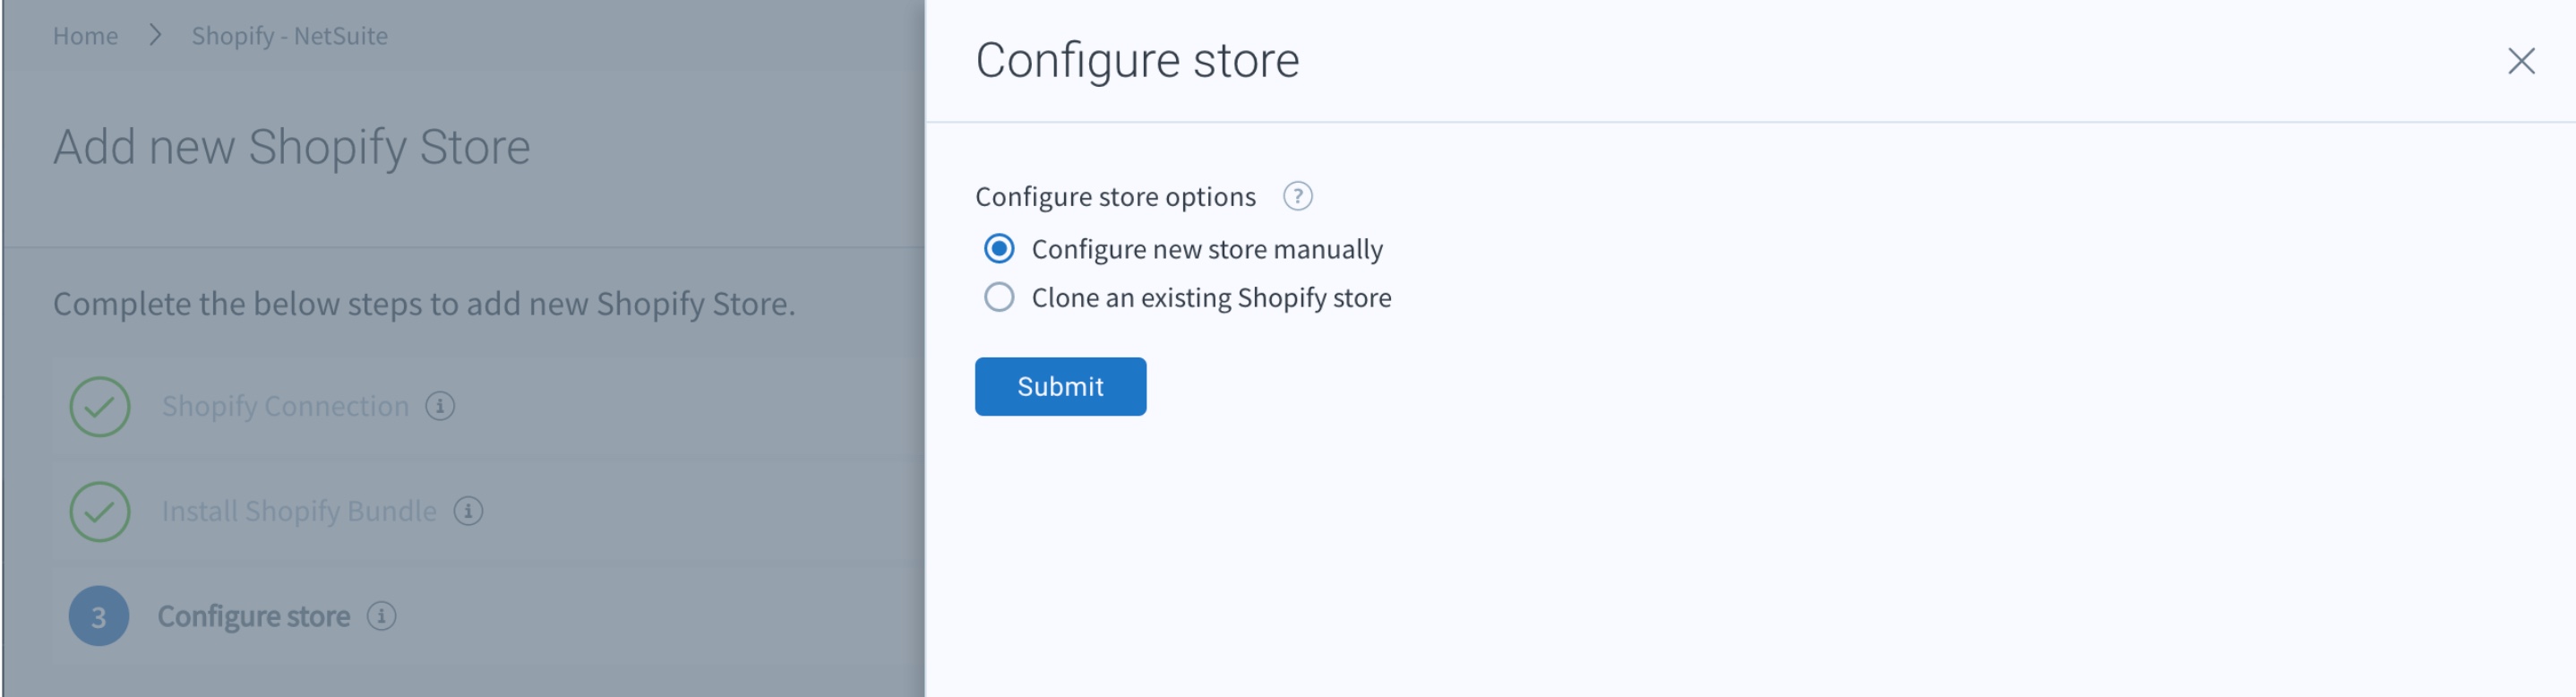 Configure_new_store_manually.jpg